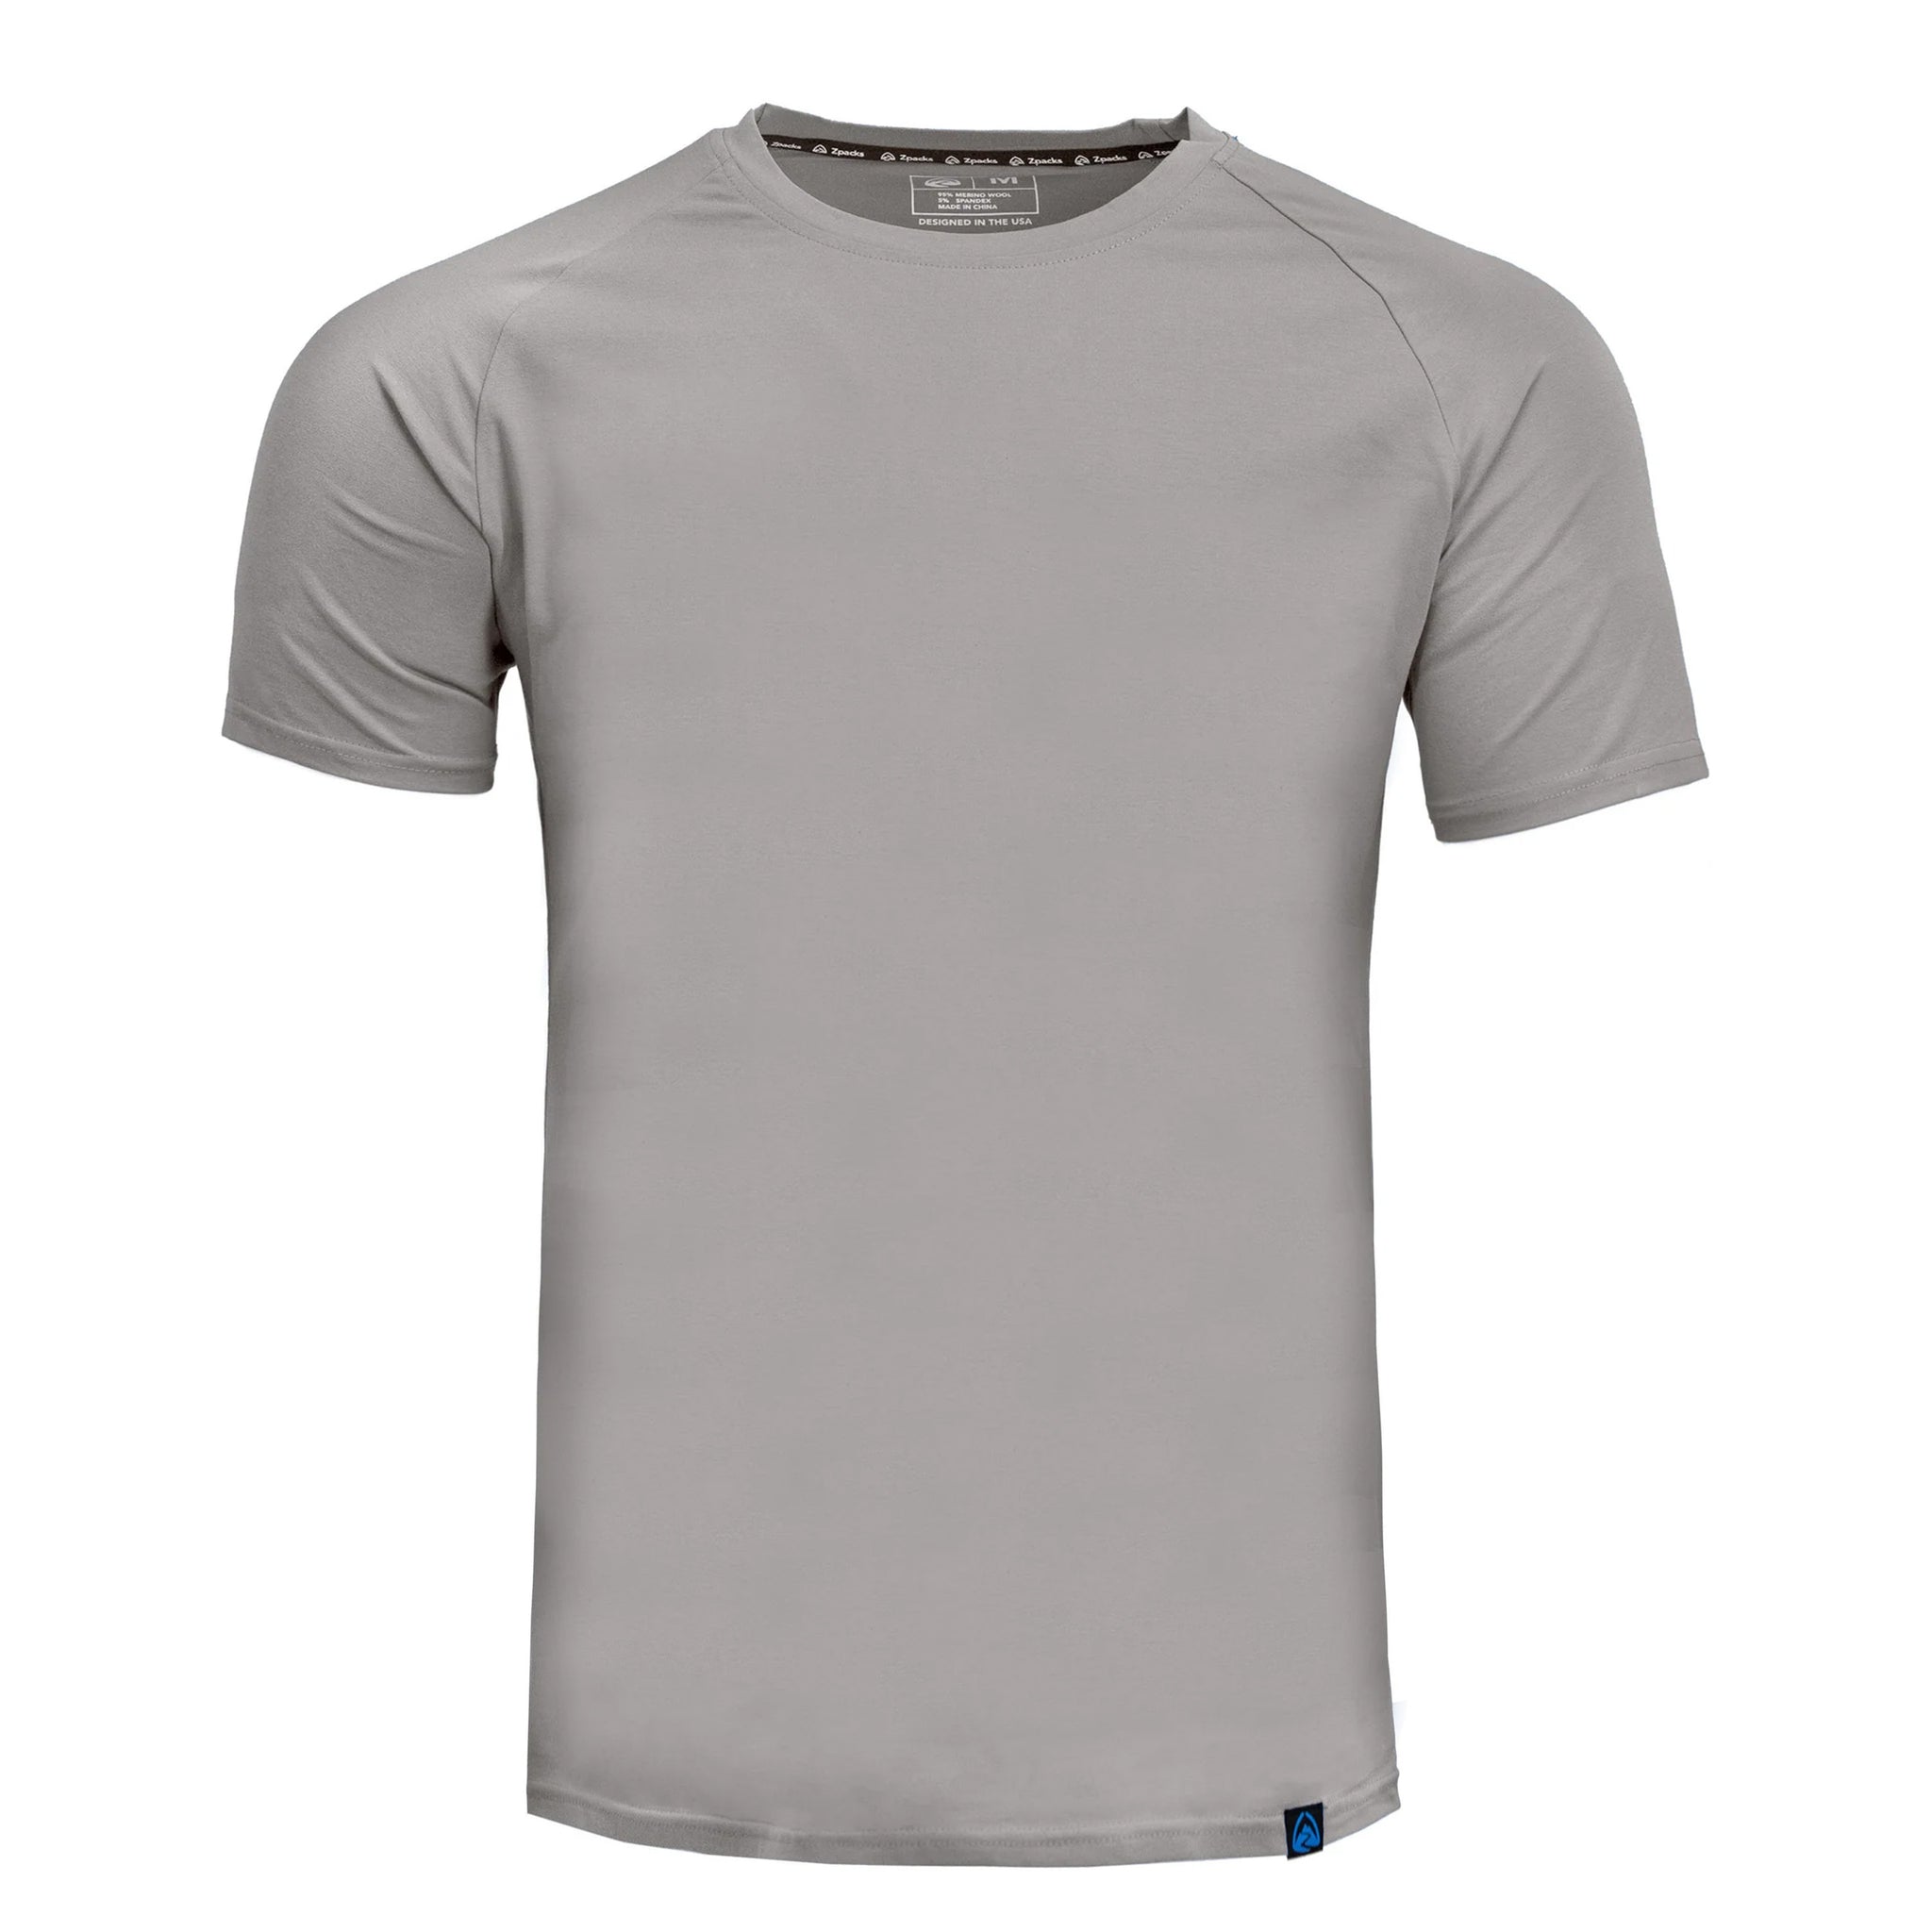 Merino Cool T-Shirt Trail Zpacks Wool